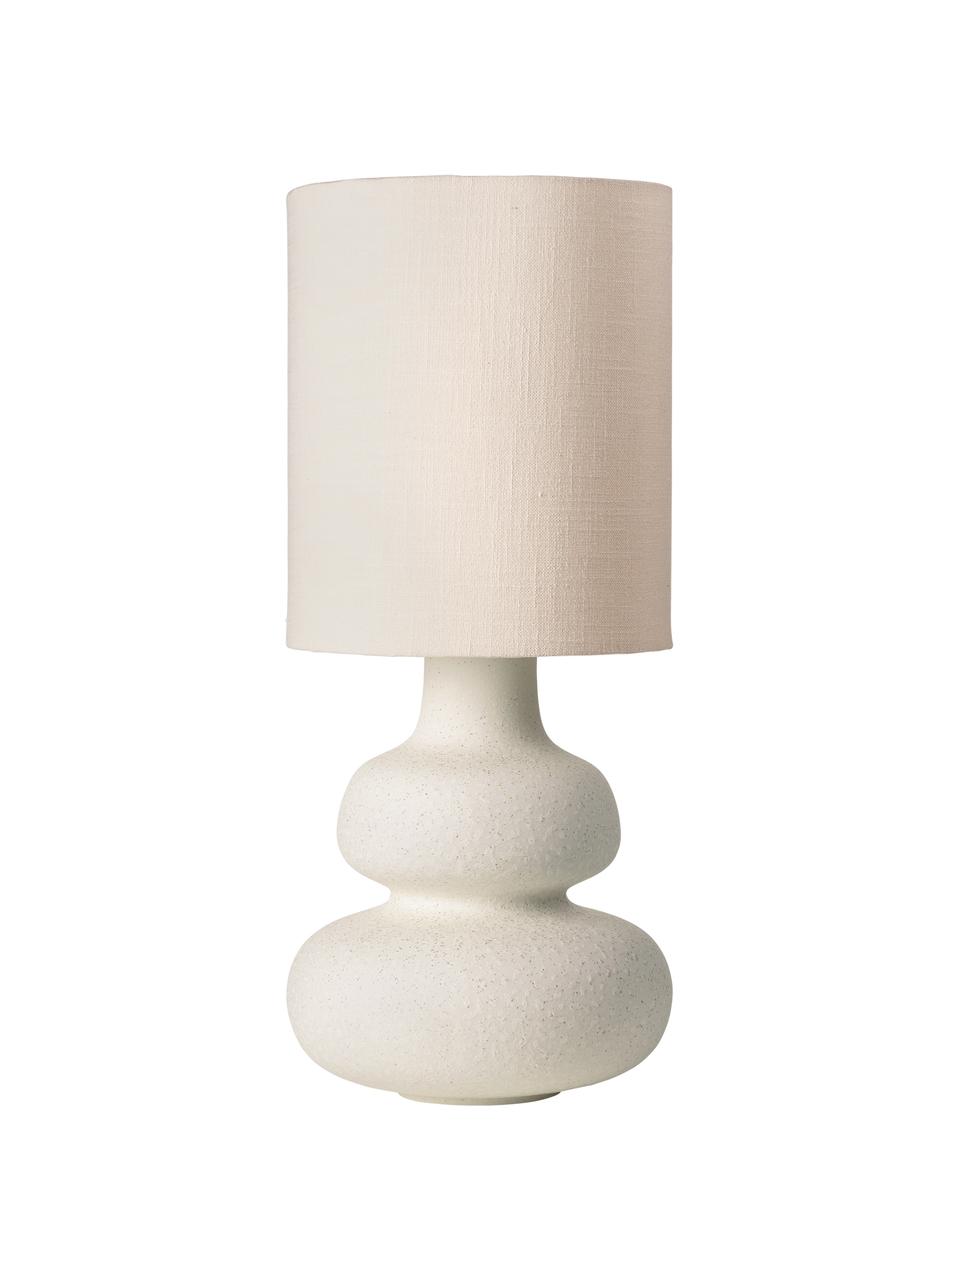 Große Tischlampe Dandie aus Keramik, Lampenschirm: Stoff, Lampenfuß: Keramik, Beige, Ø 26 x H 61 cm